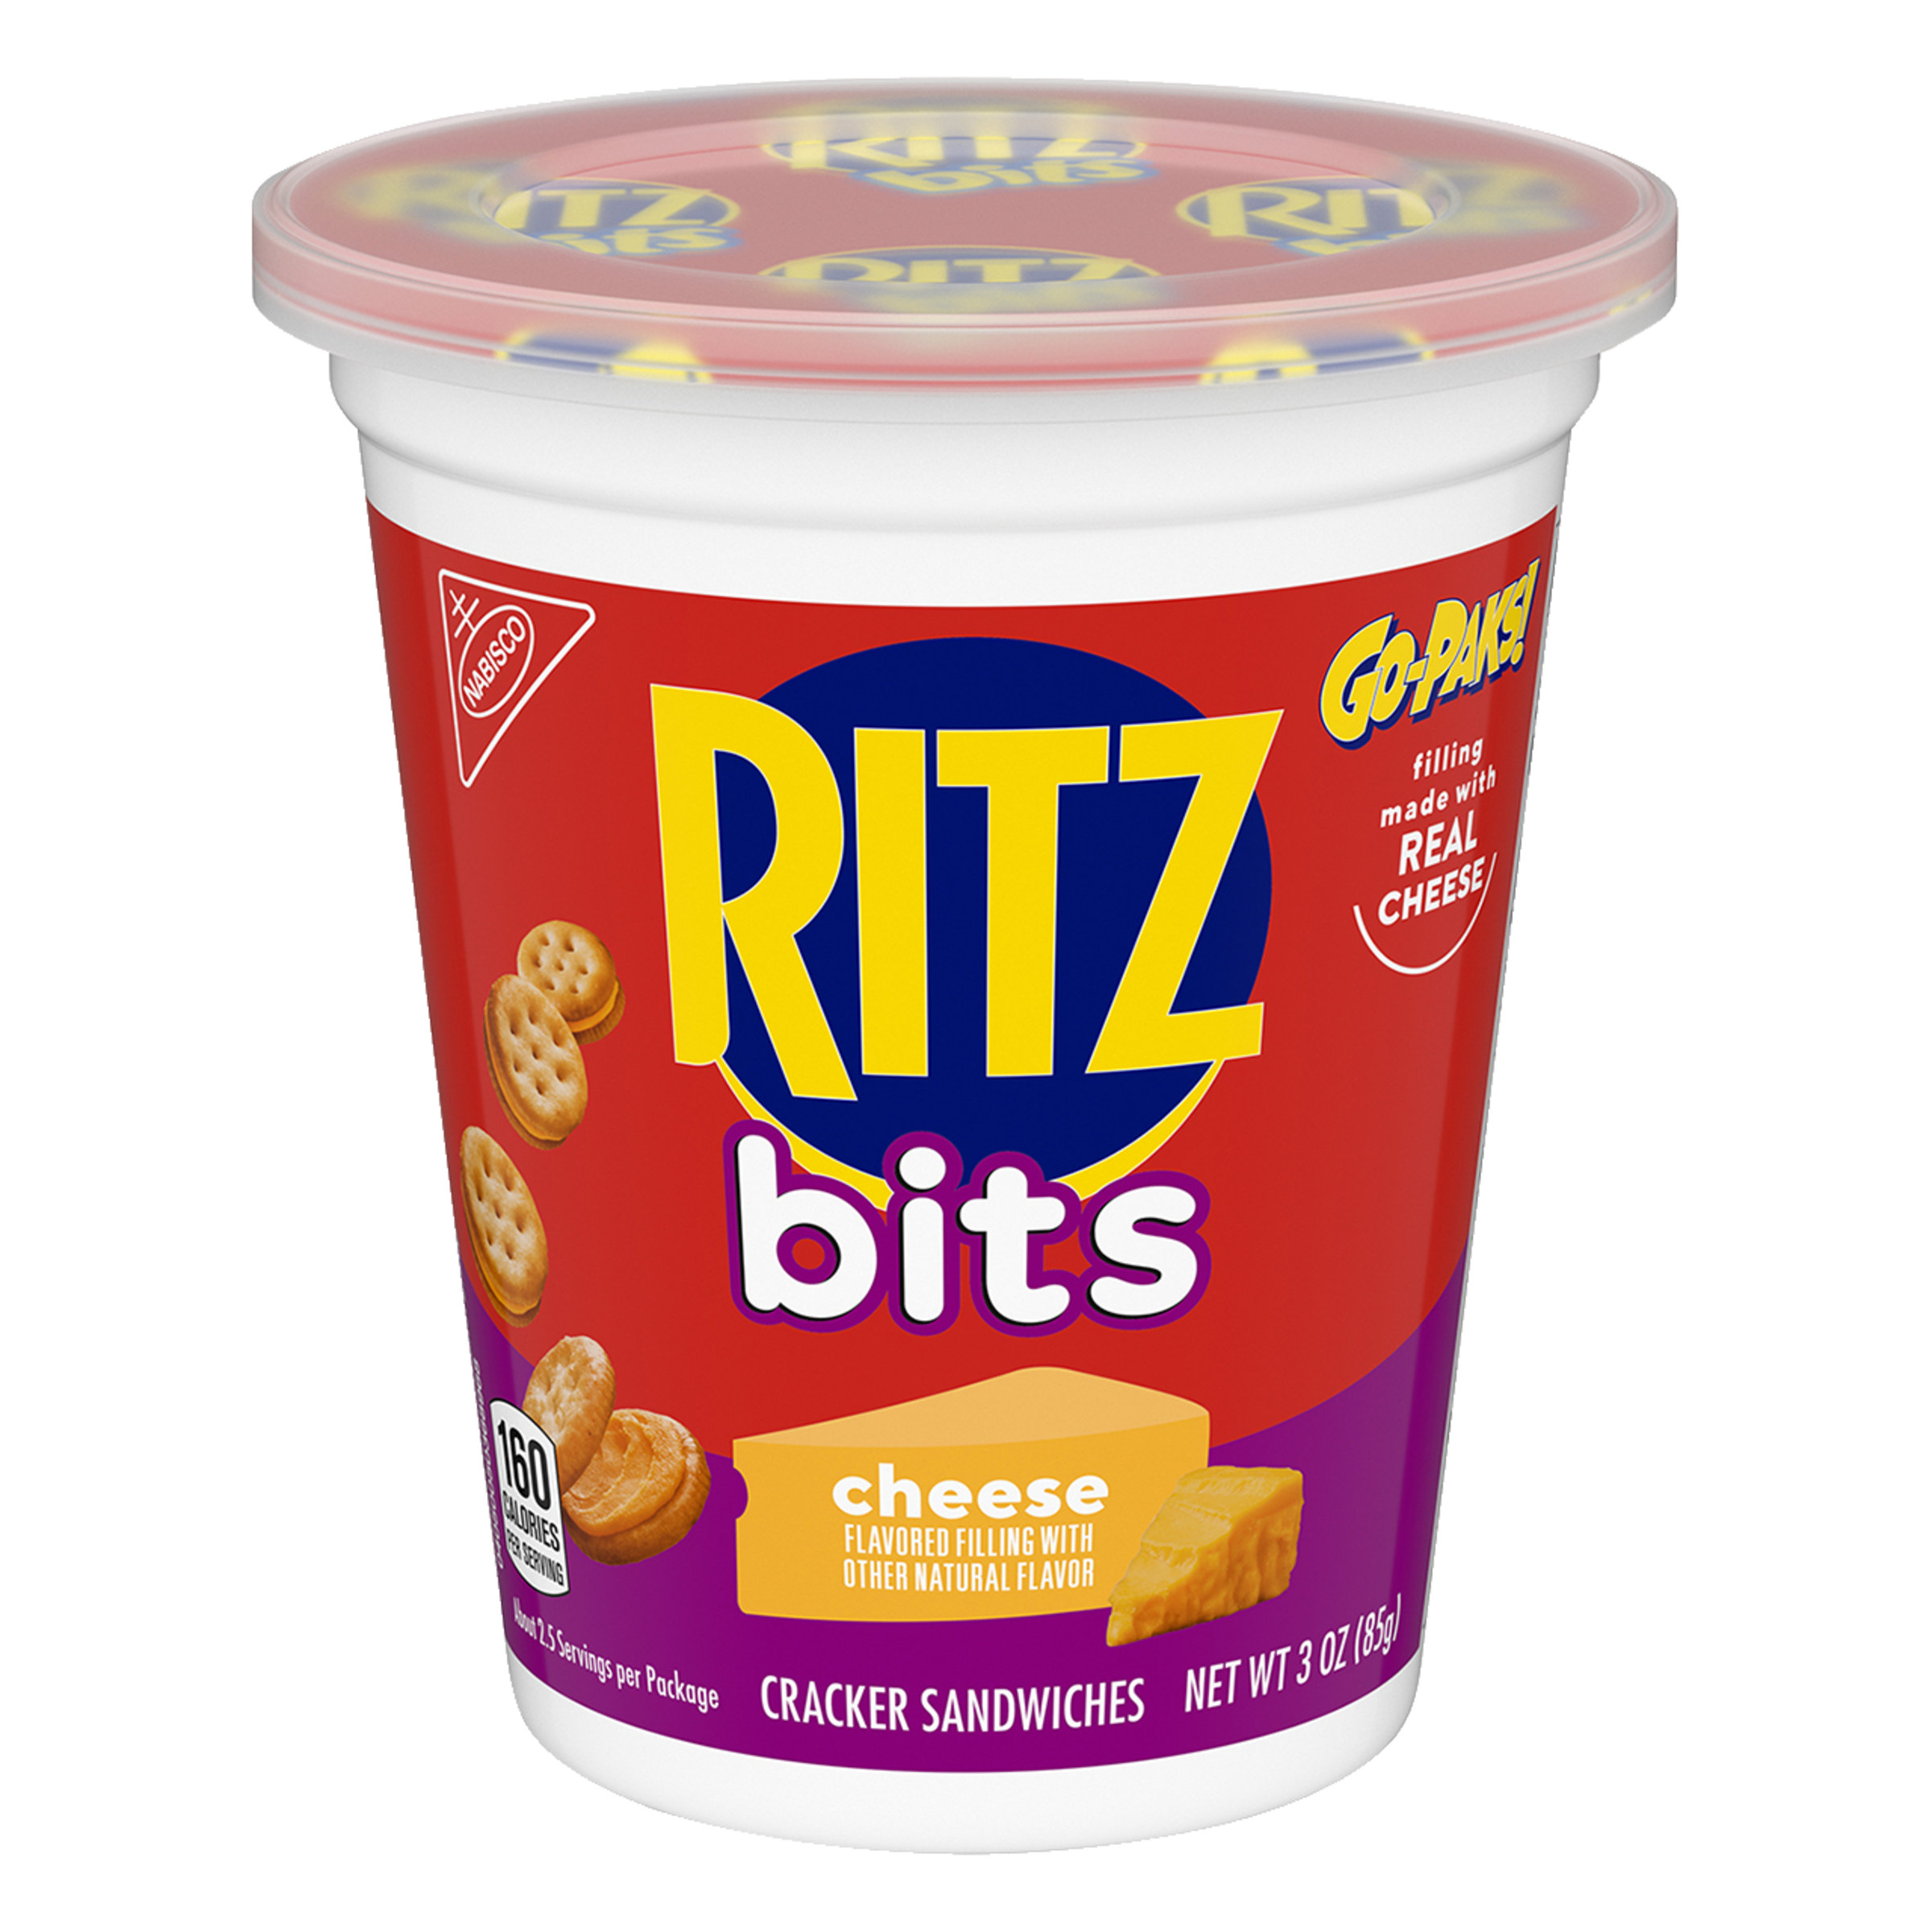 RITZ Bits GO-PAKS! - Cheese 12/3 OZ